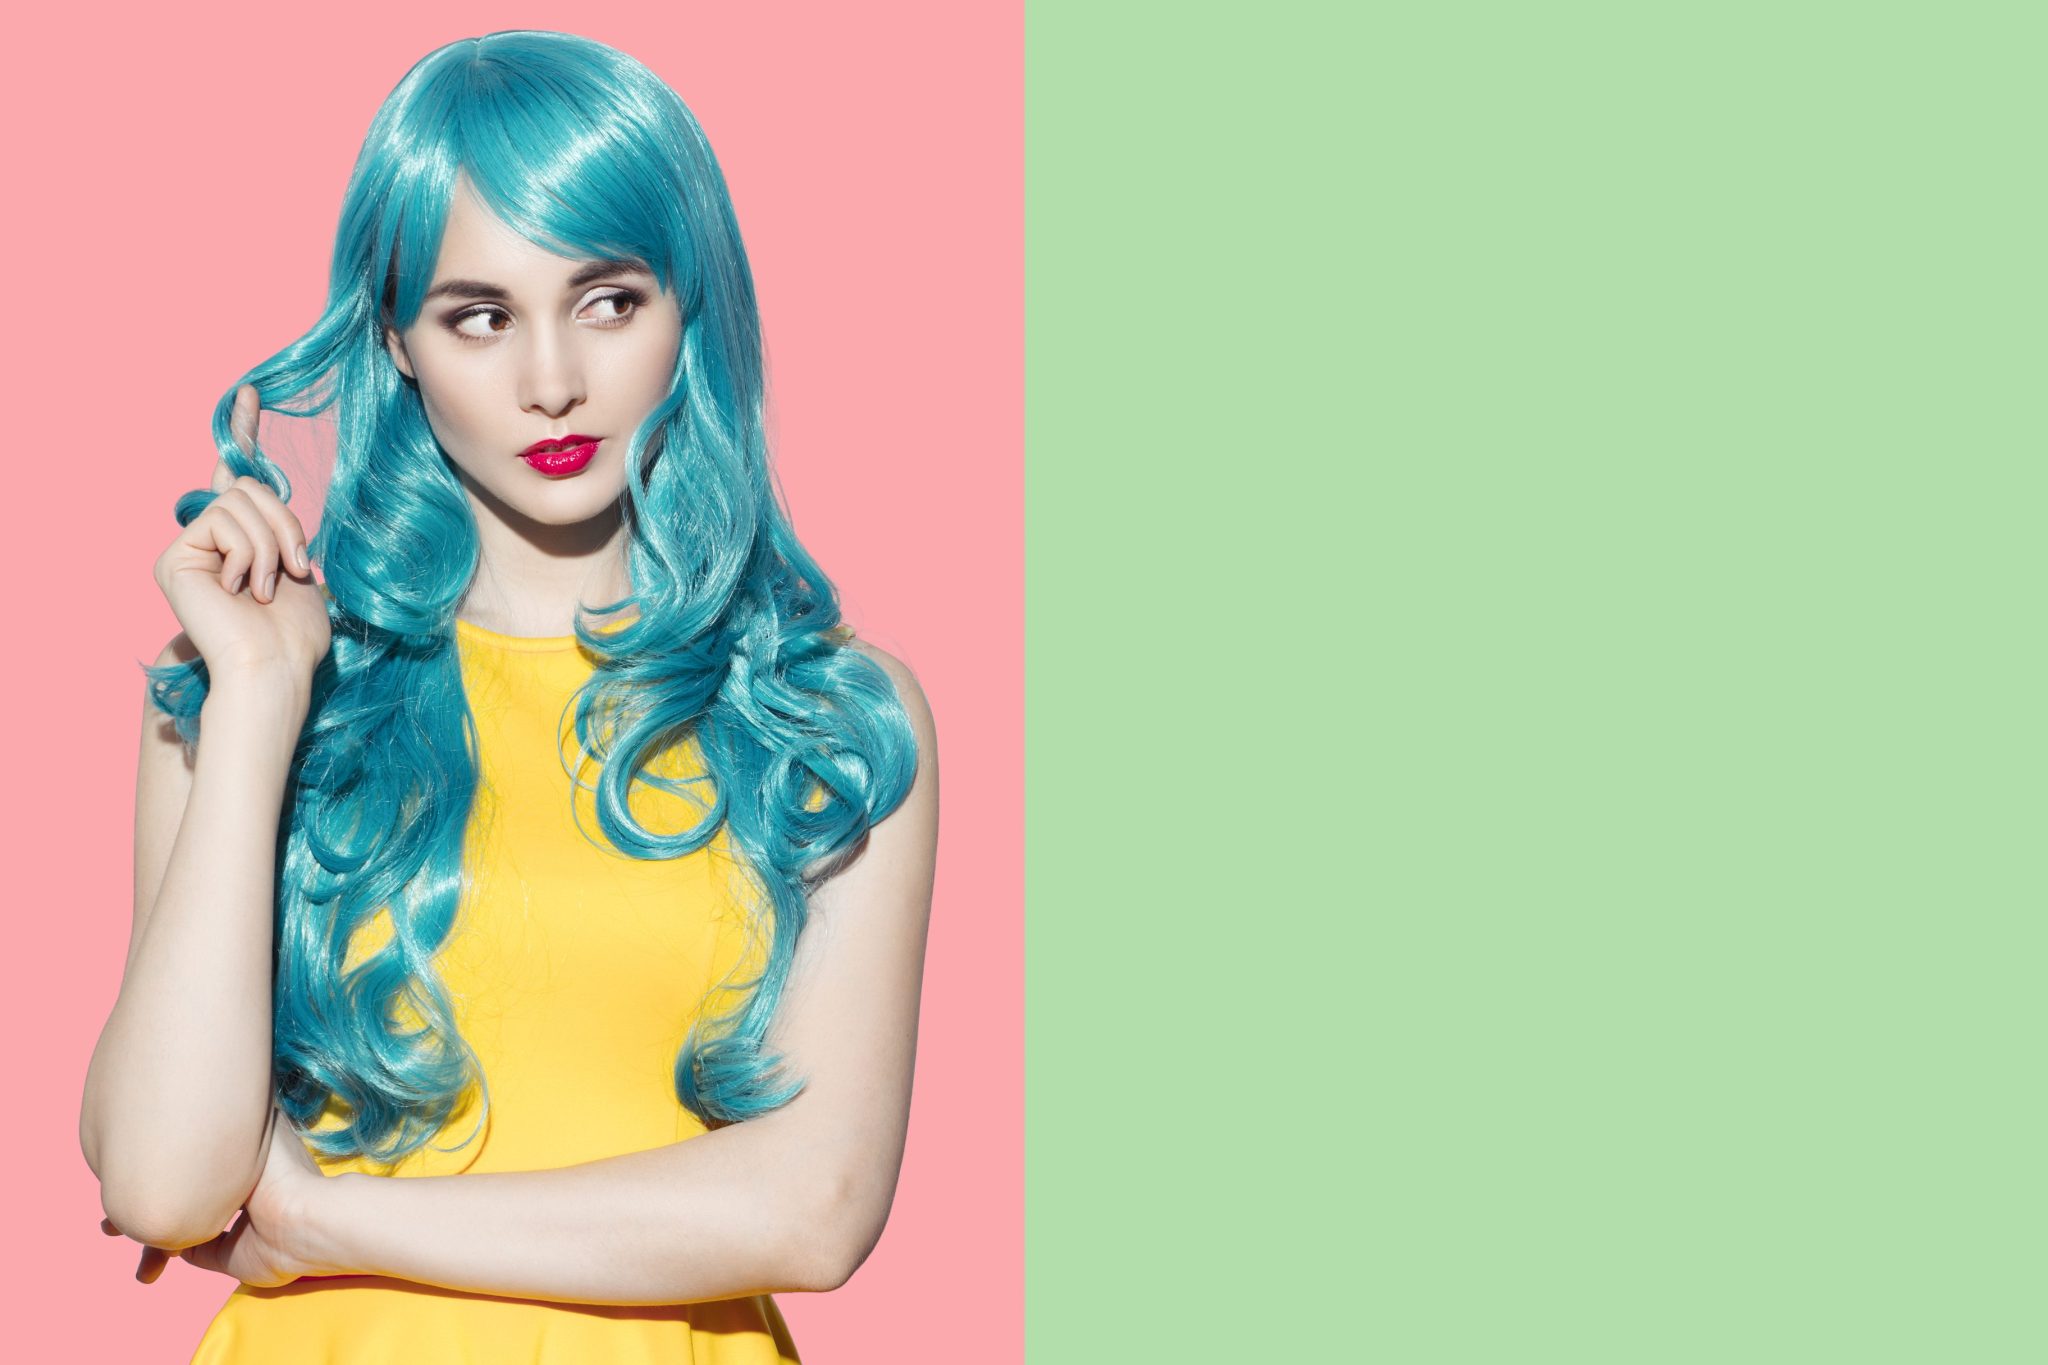 7. "25 Gorgeous Light Blue Hair Color Ideas for Women" - wide 7